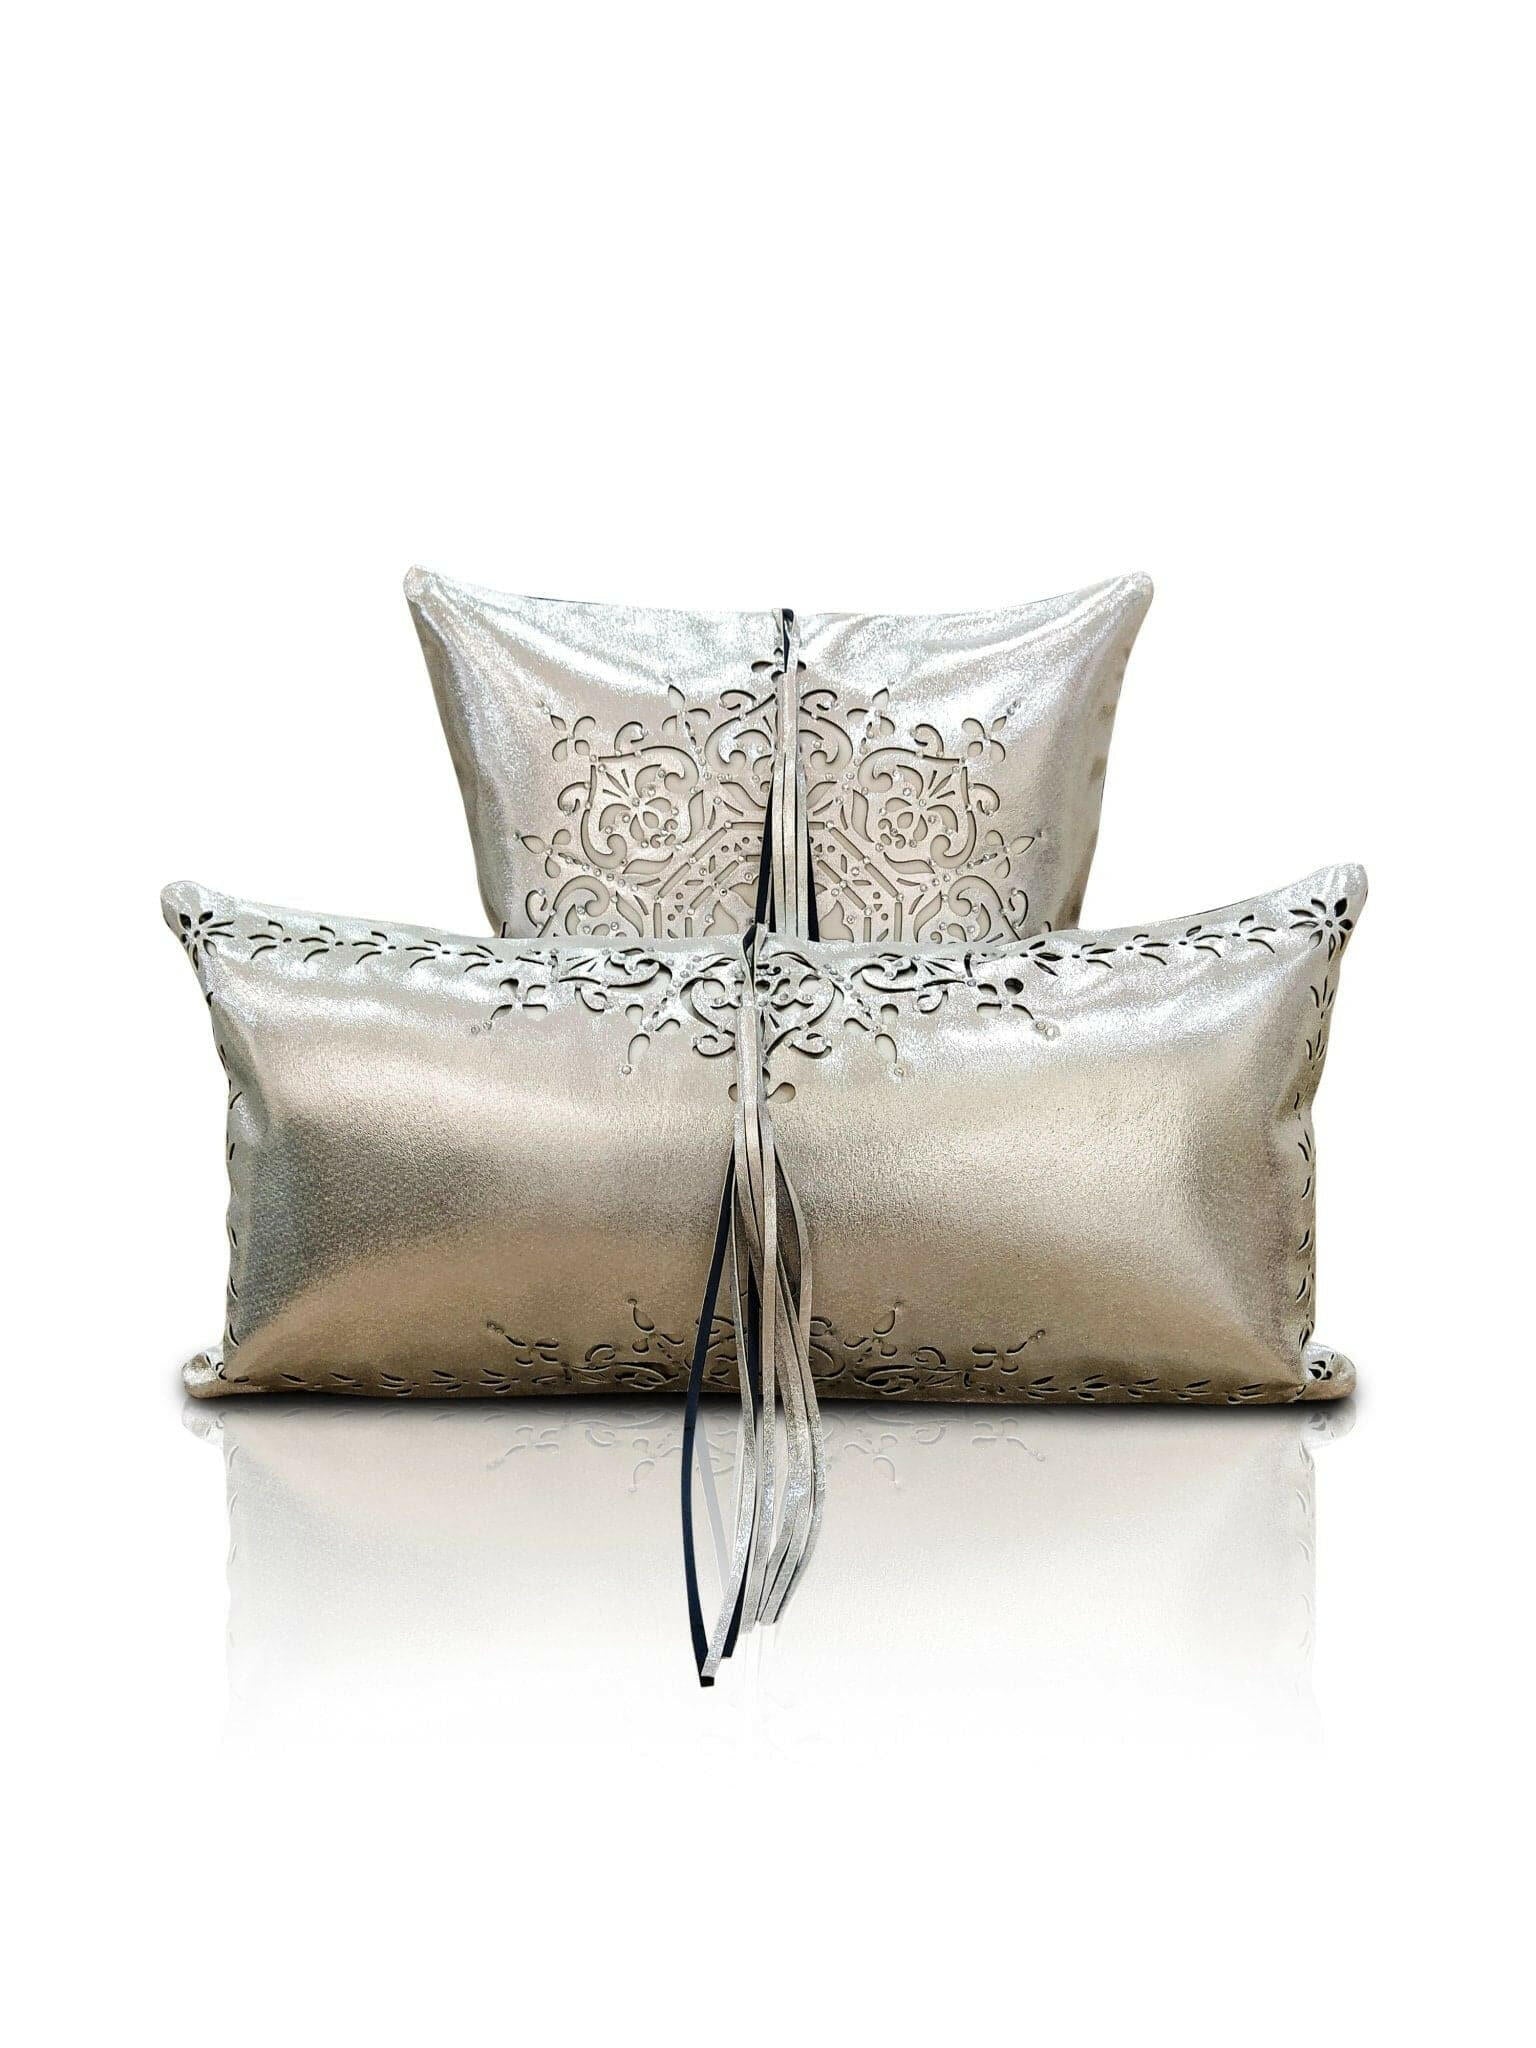 Damask Cushion Cover - Creative Home Designs Pillowcases, Turkish Throw Pillows & Shams, Silver Color Cut Out Sham With Diamonds